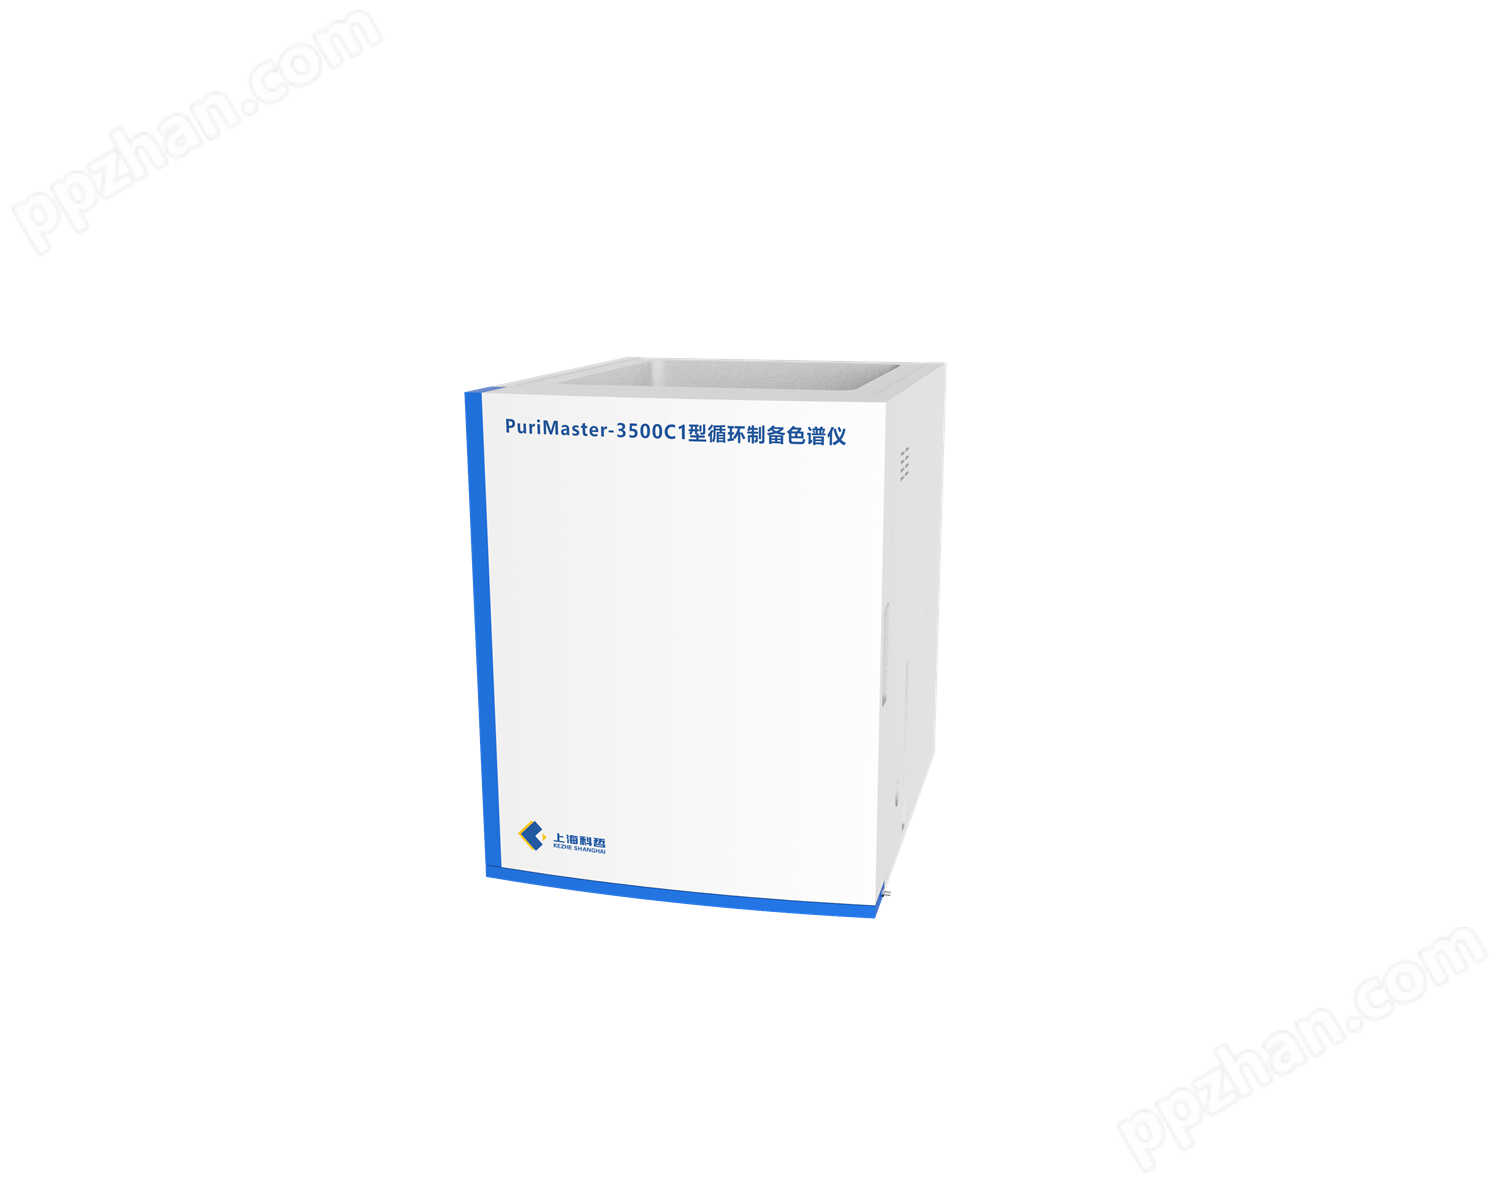 PuriMaster-3500C1型循环制备色谱仪